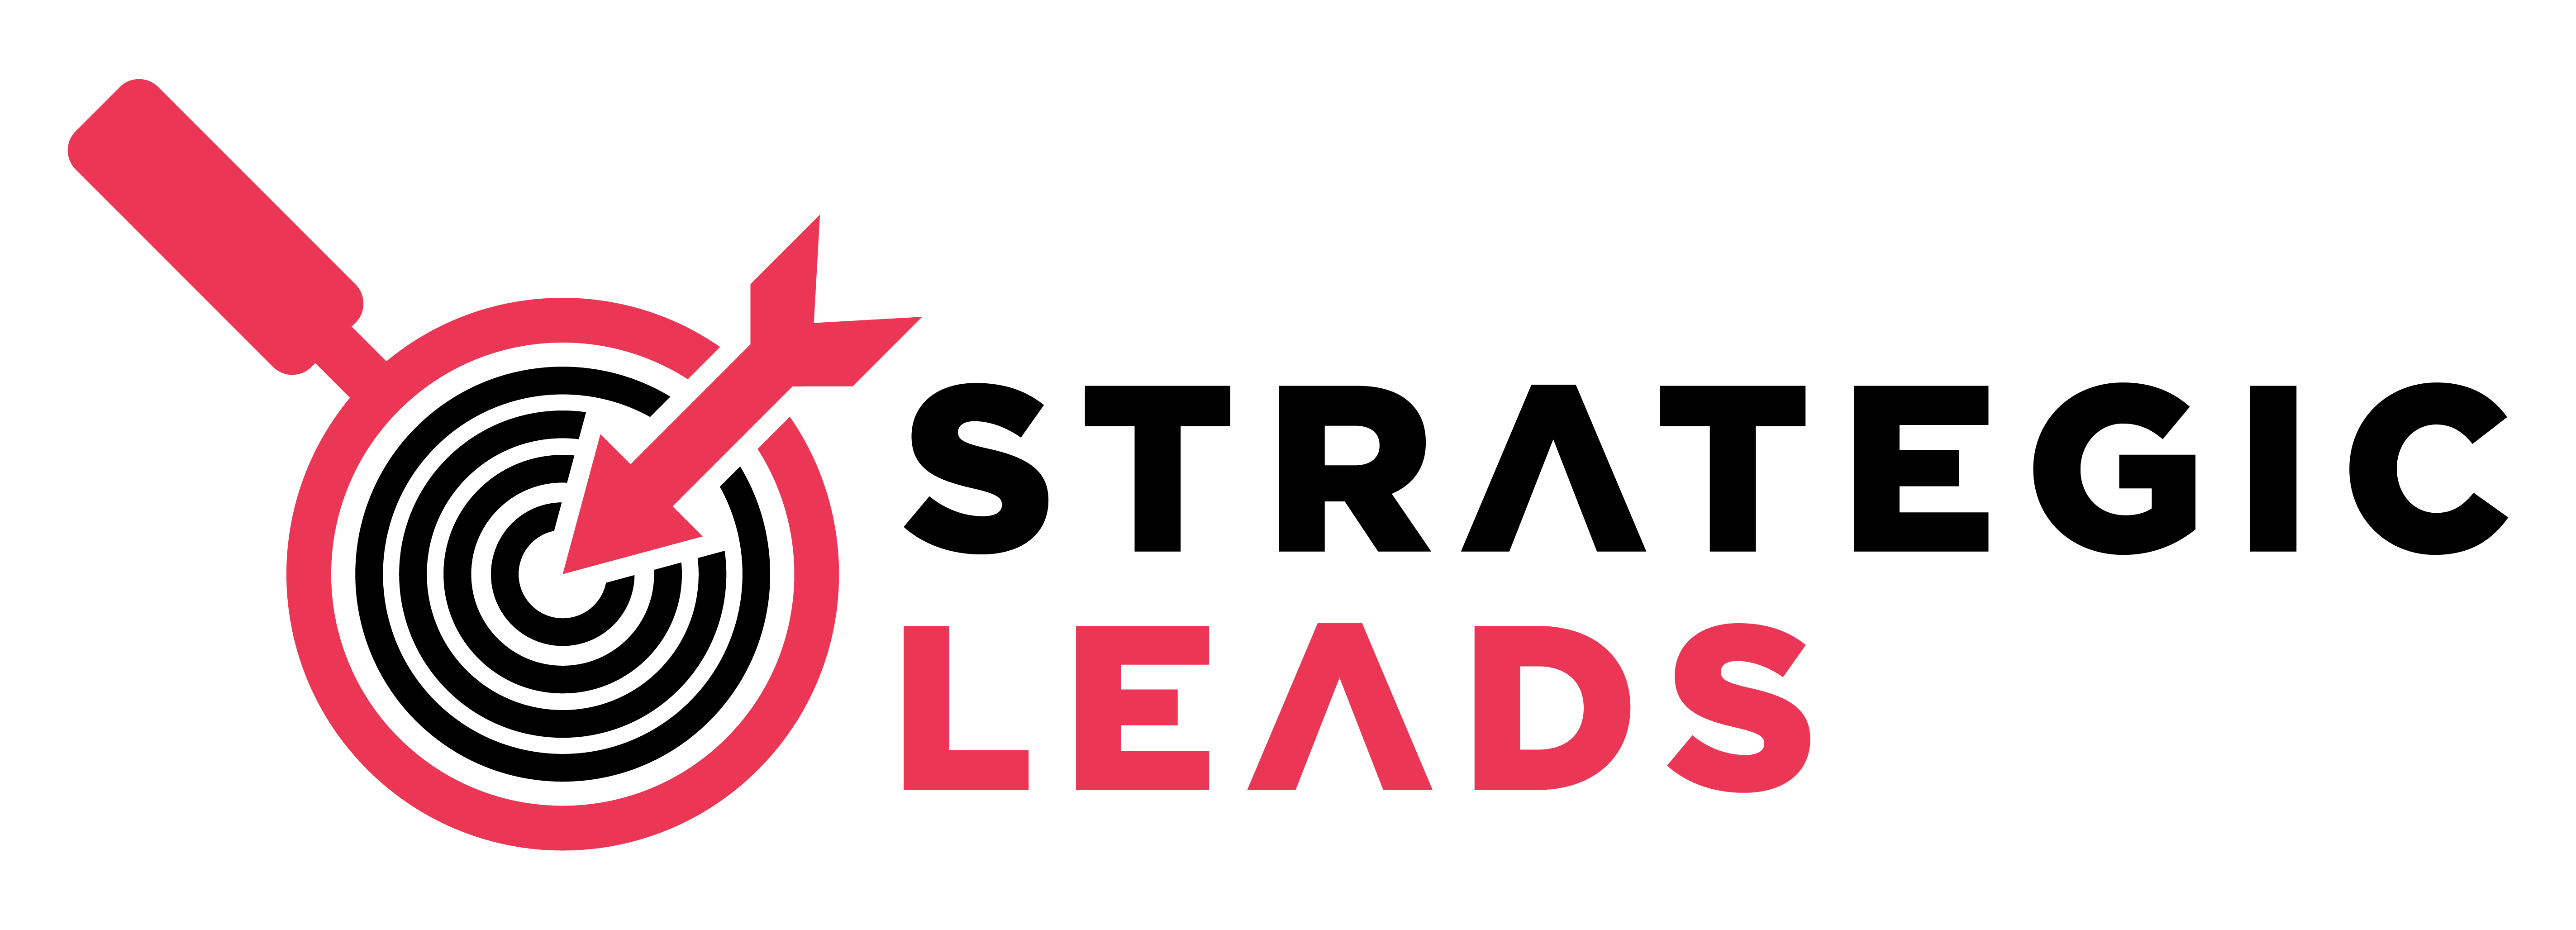 Strategic Leads LLC - SEO & Lead Generation Services New York, NY